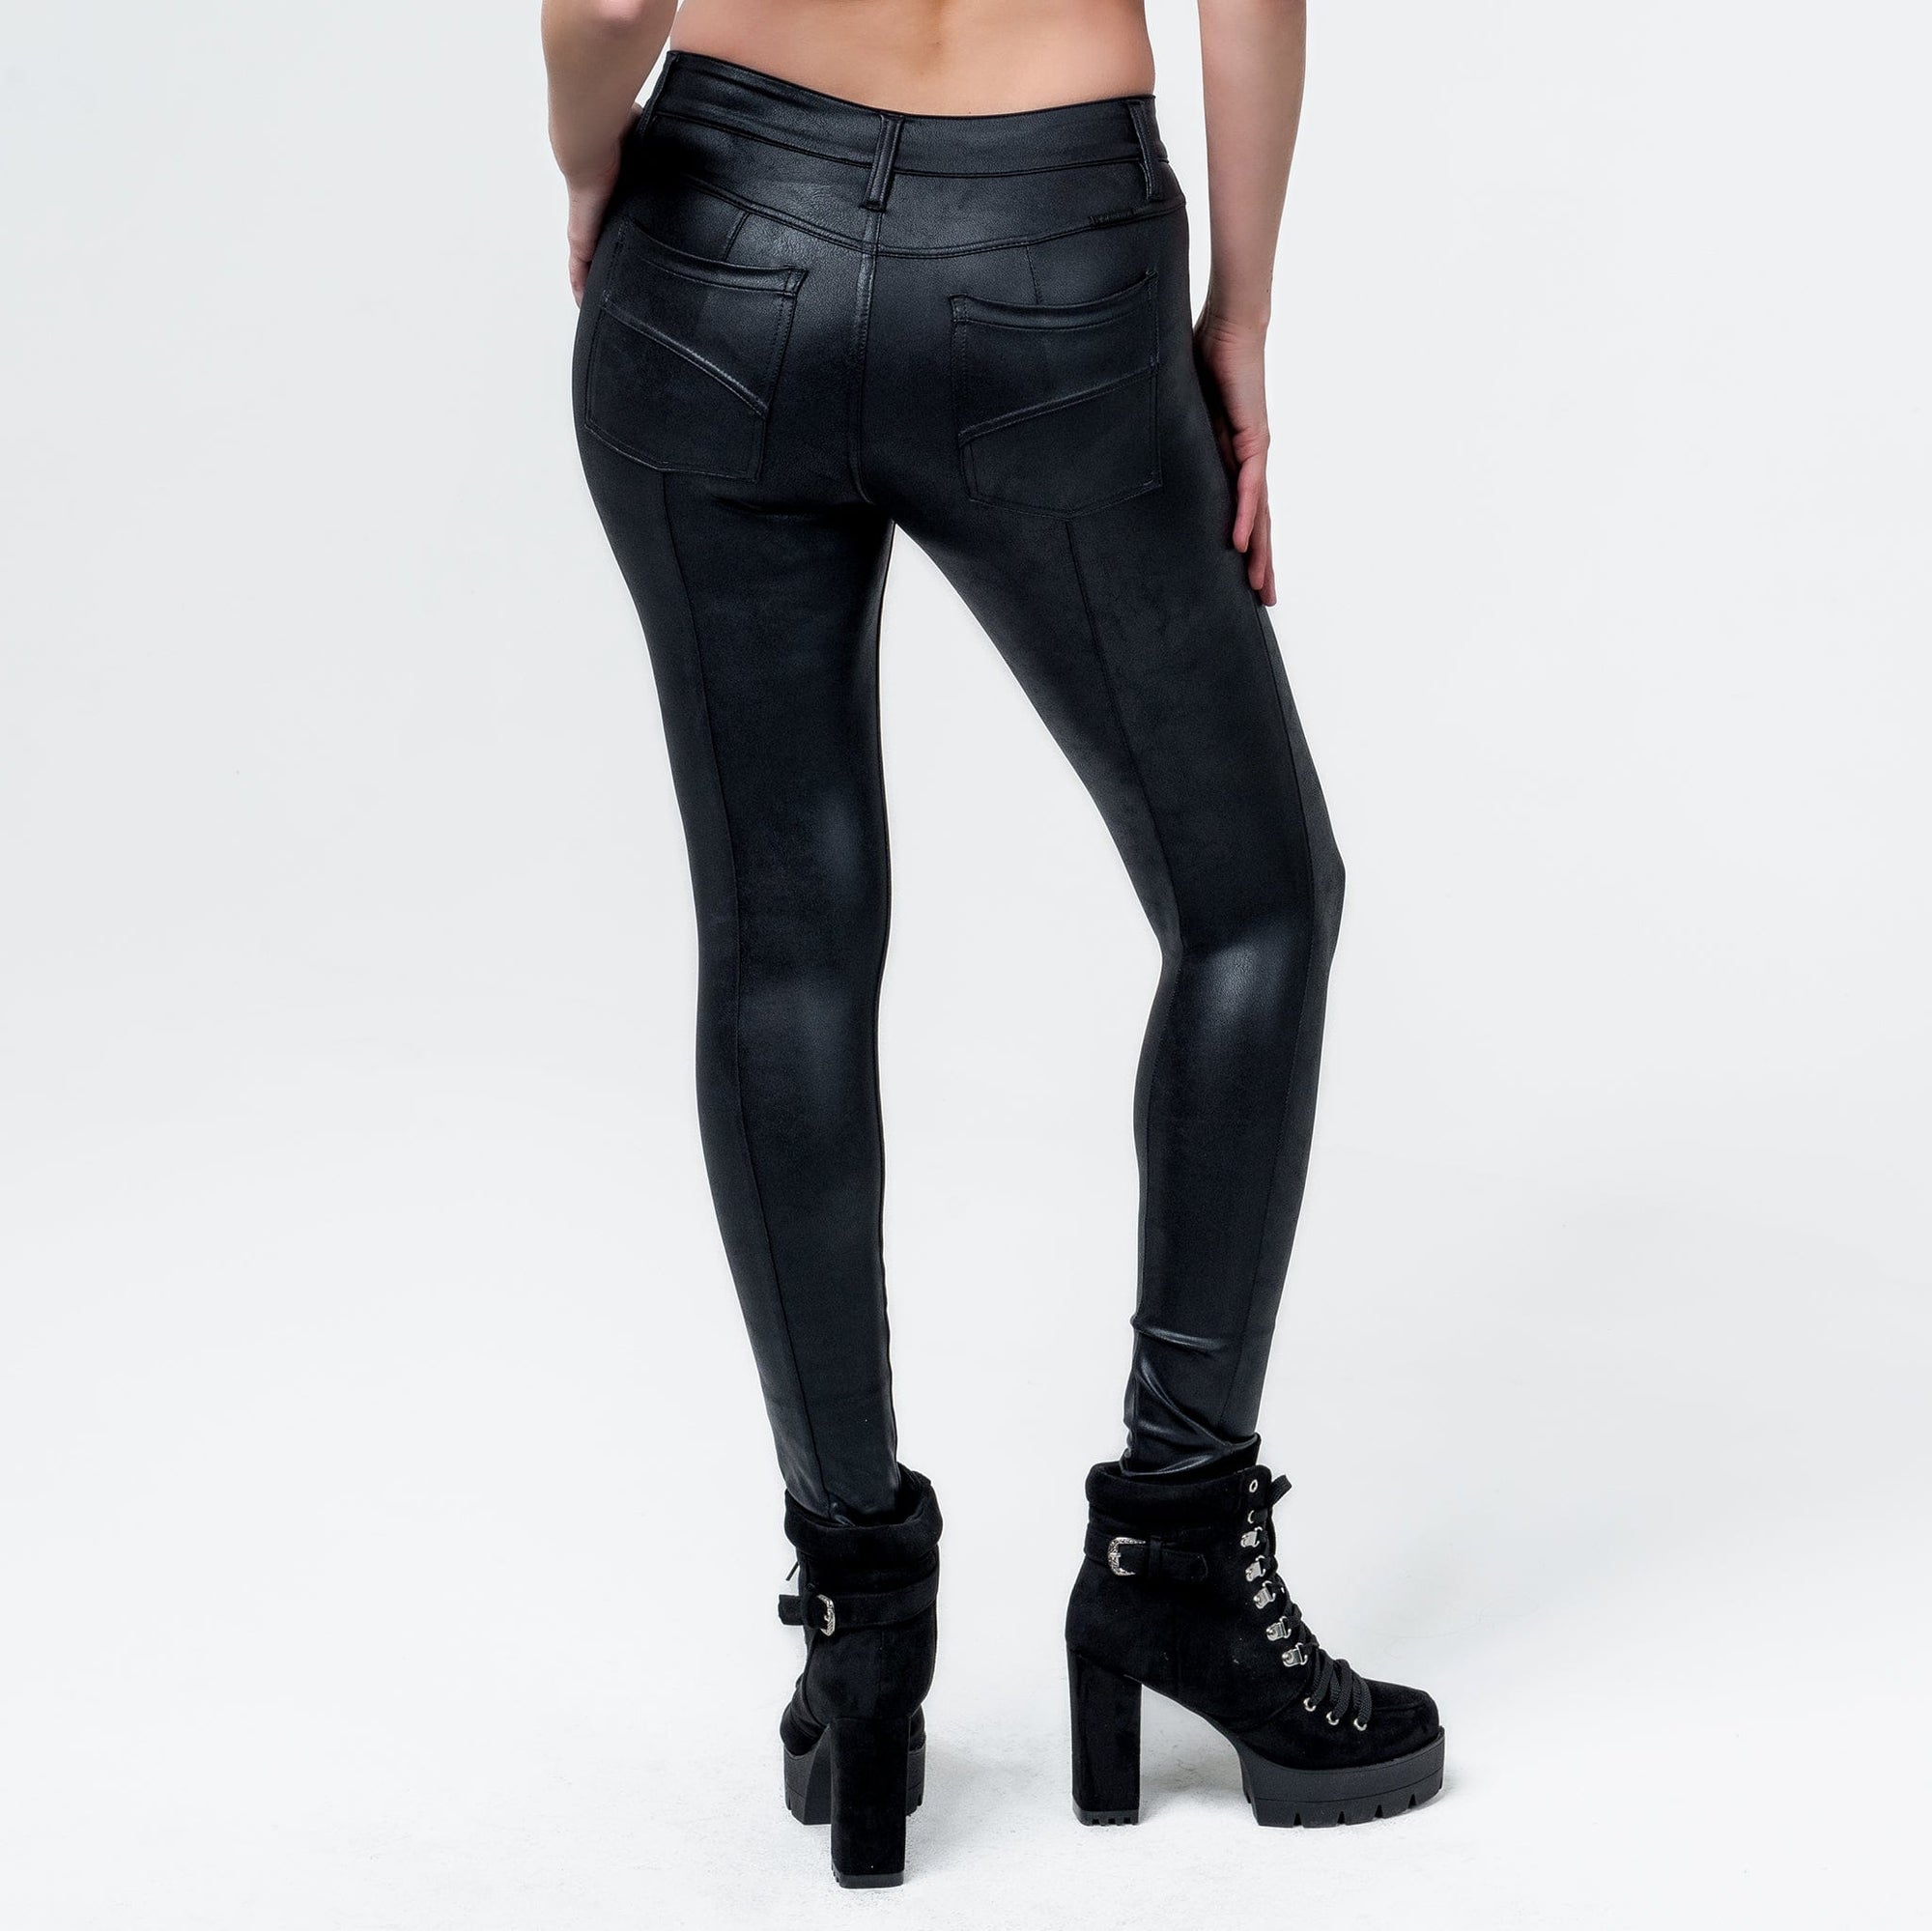 Wornstar Clothing Womens Pants. Fearless Skinny Cut Pants - Black